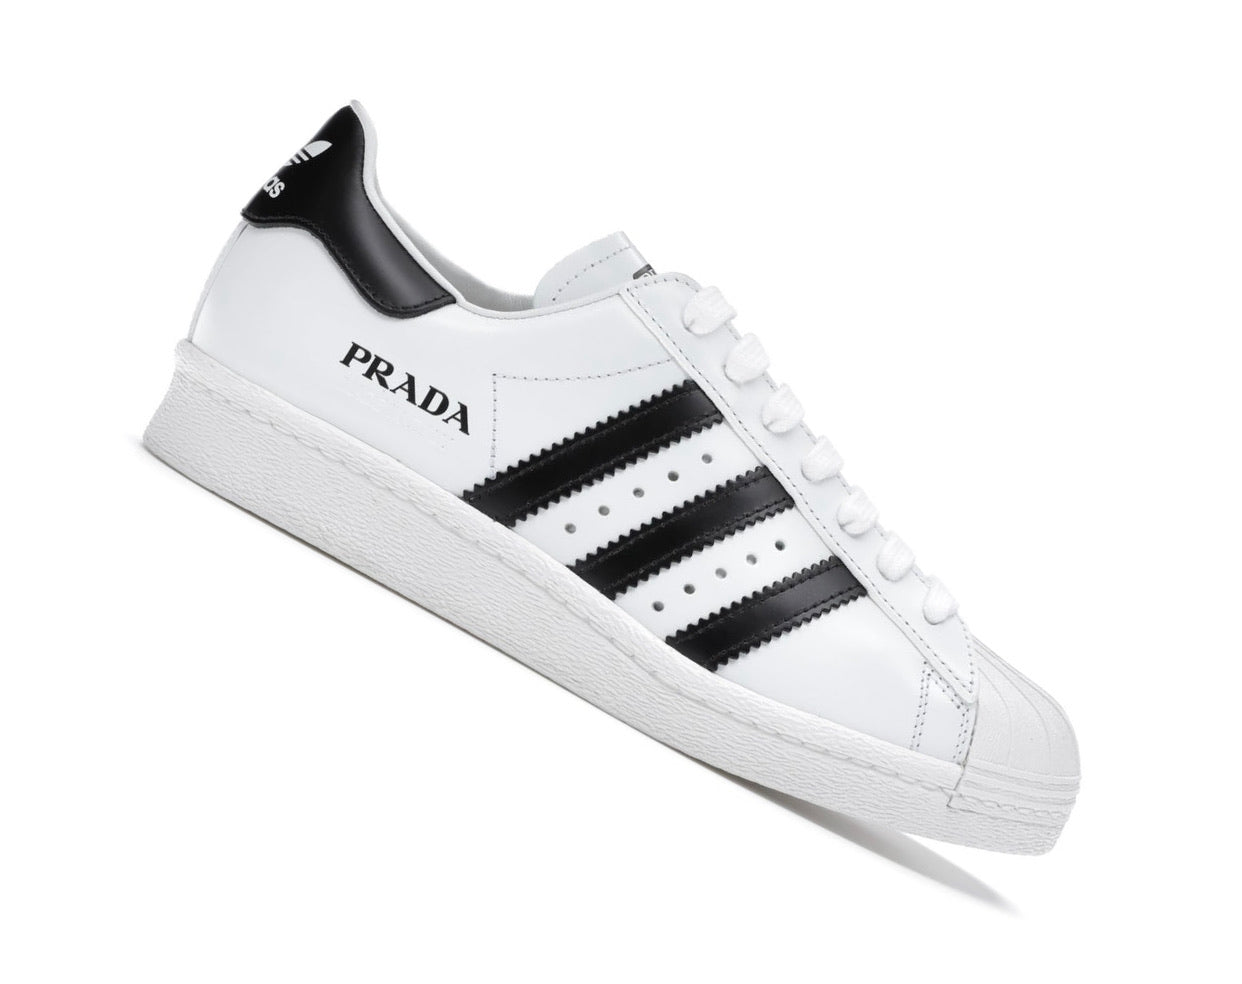 Adidas Superstar ‘Prada White Black’